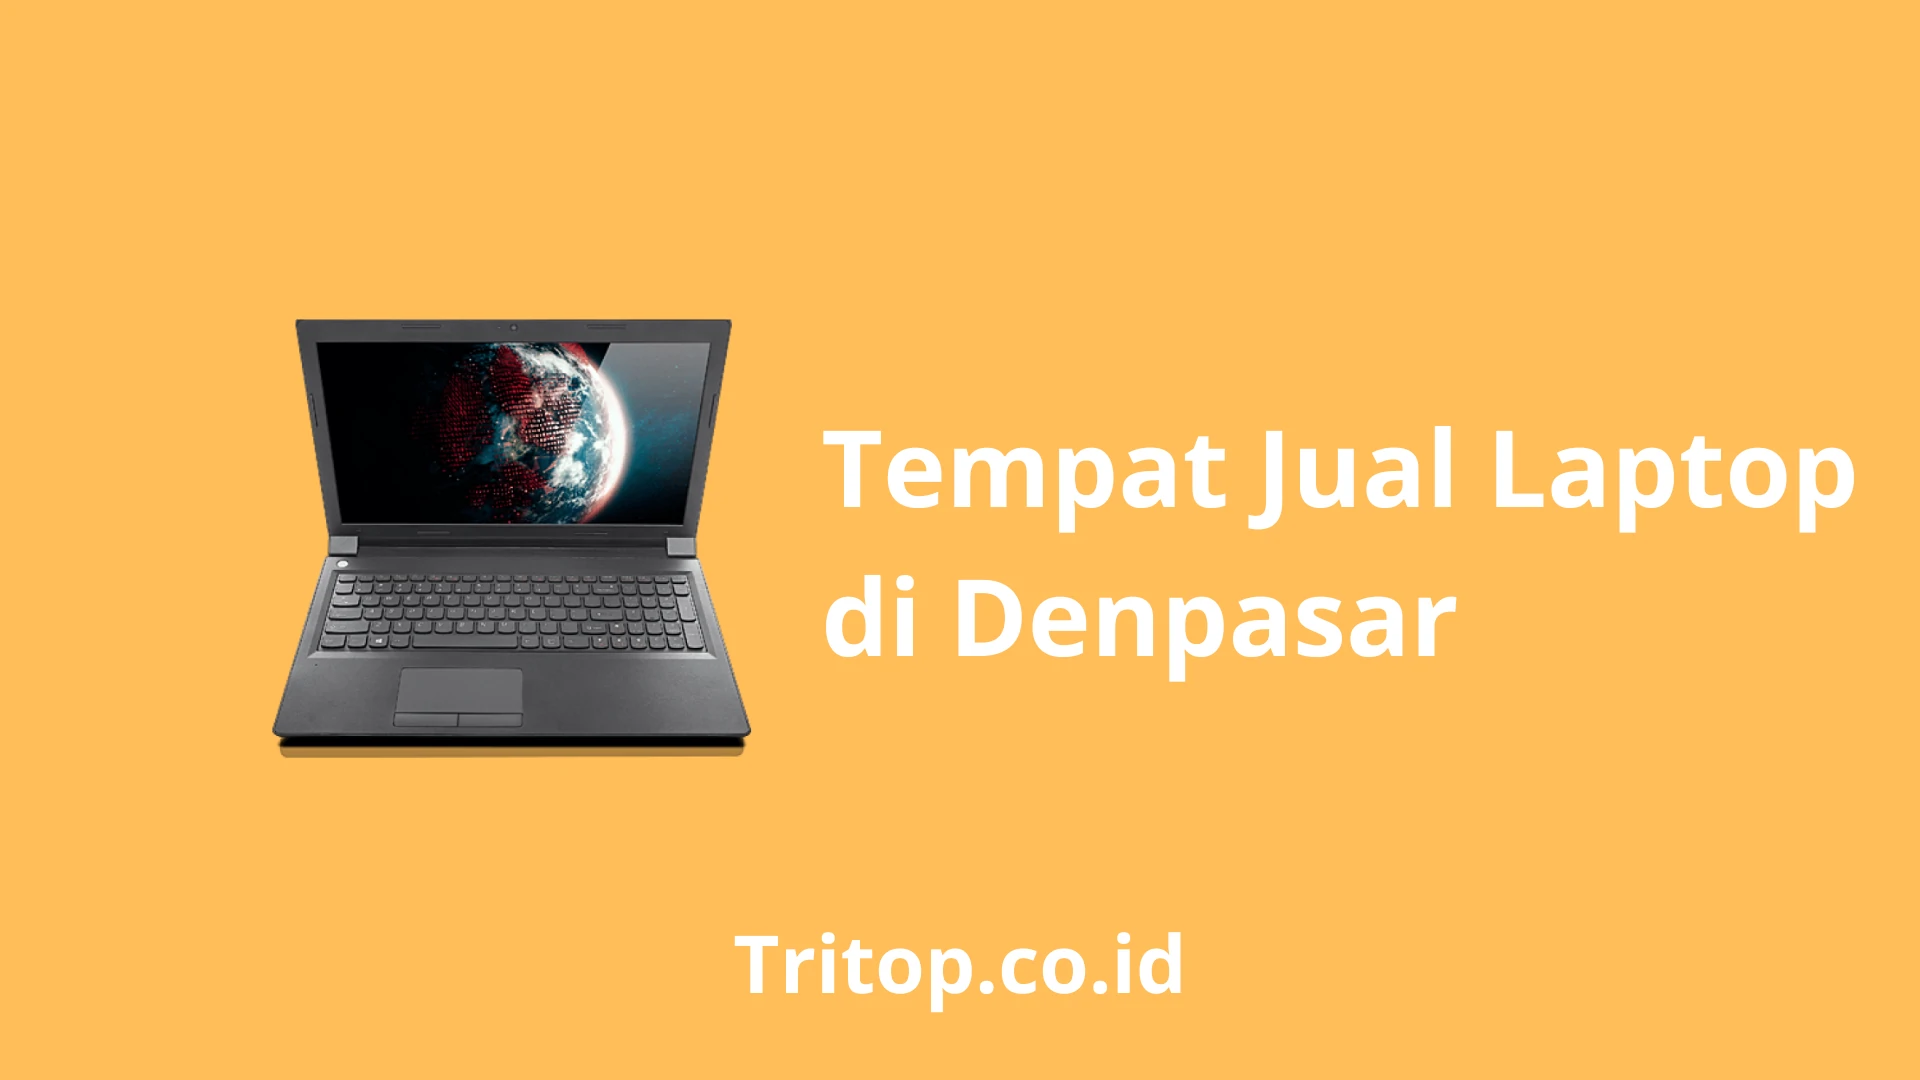 Denpasar Laptop Tritop.co.id